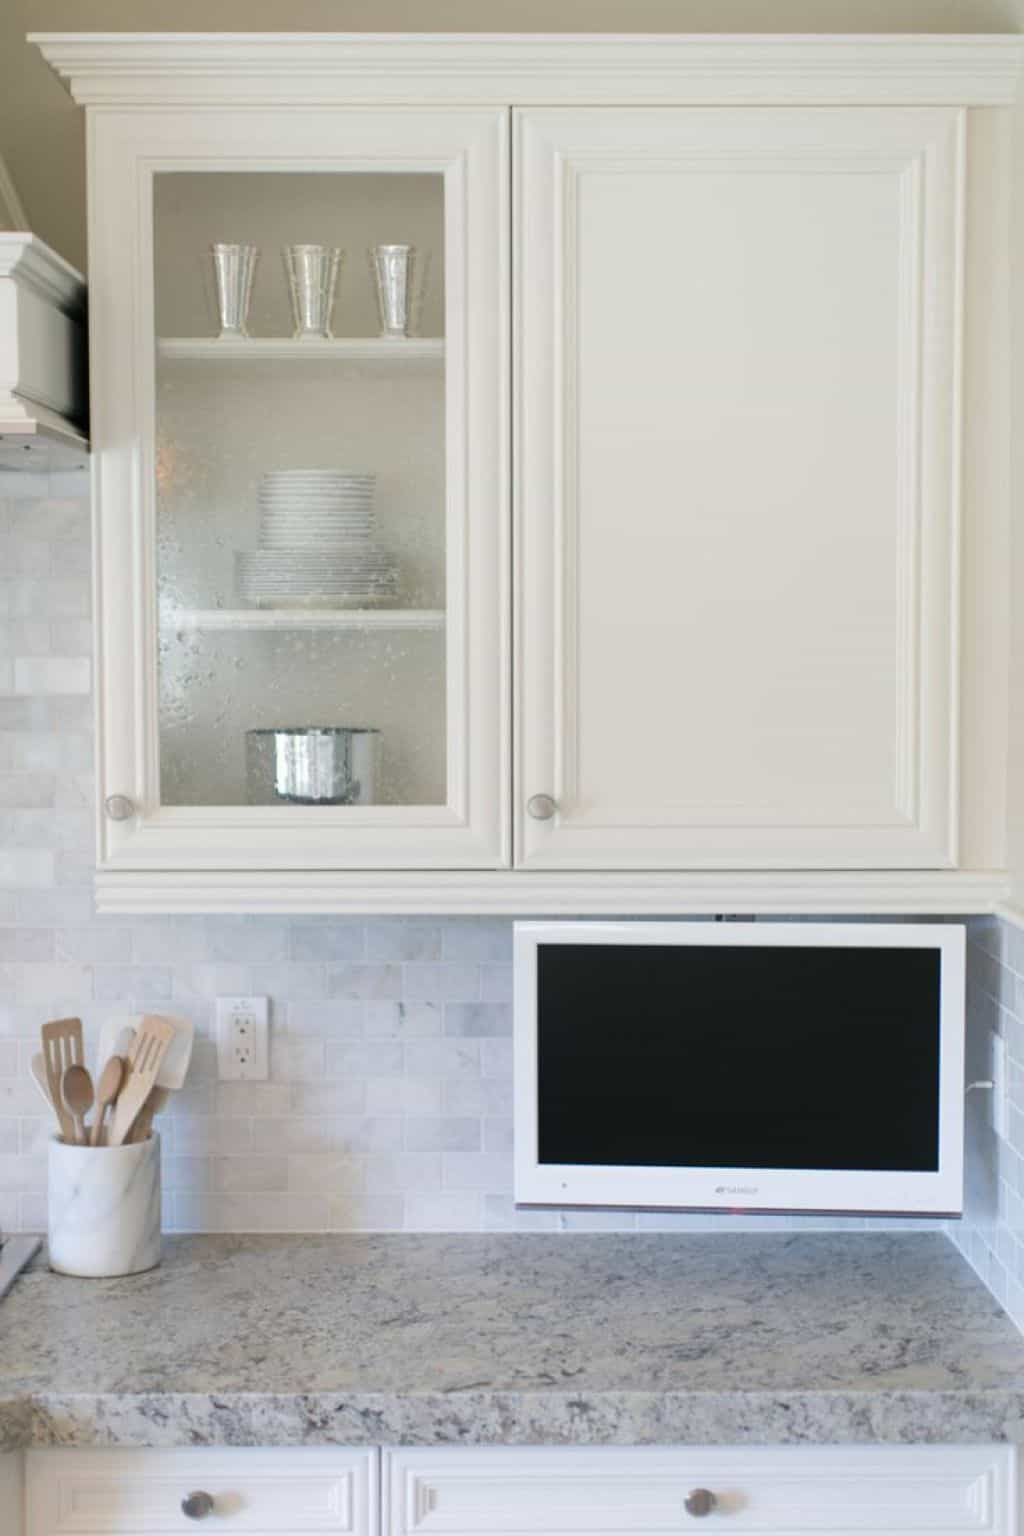 Kitchen Televisions Under Cabinet
 Kitchen With LCD TV Under Cabinets Adding A Kitchen TV